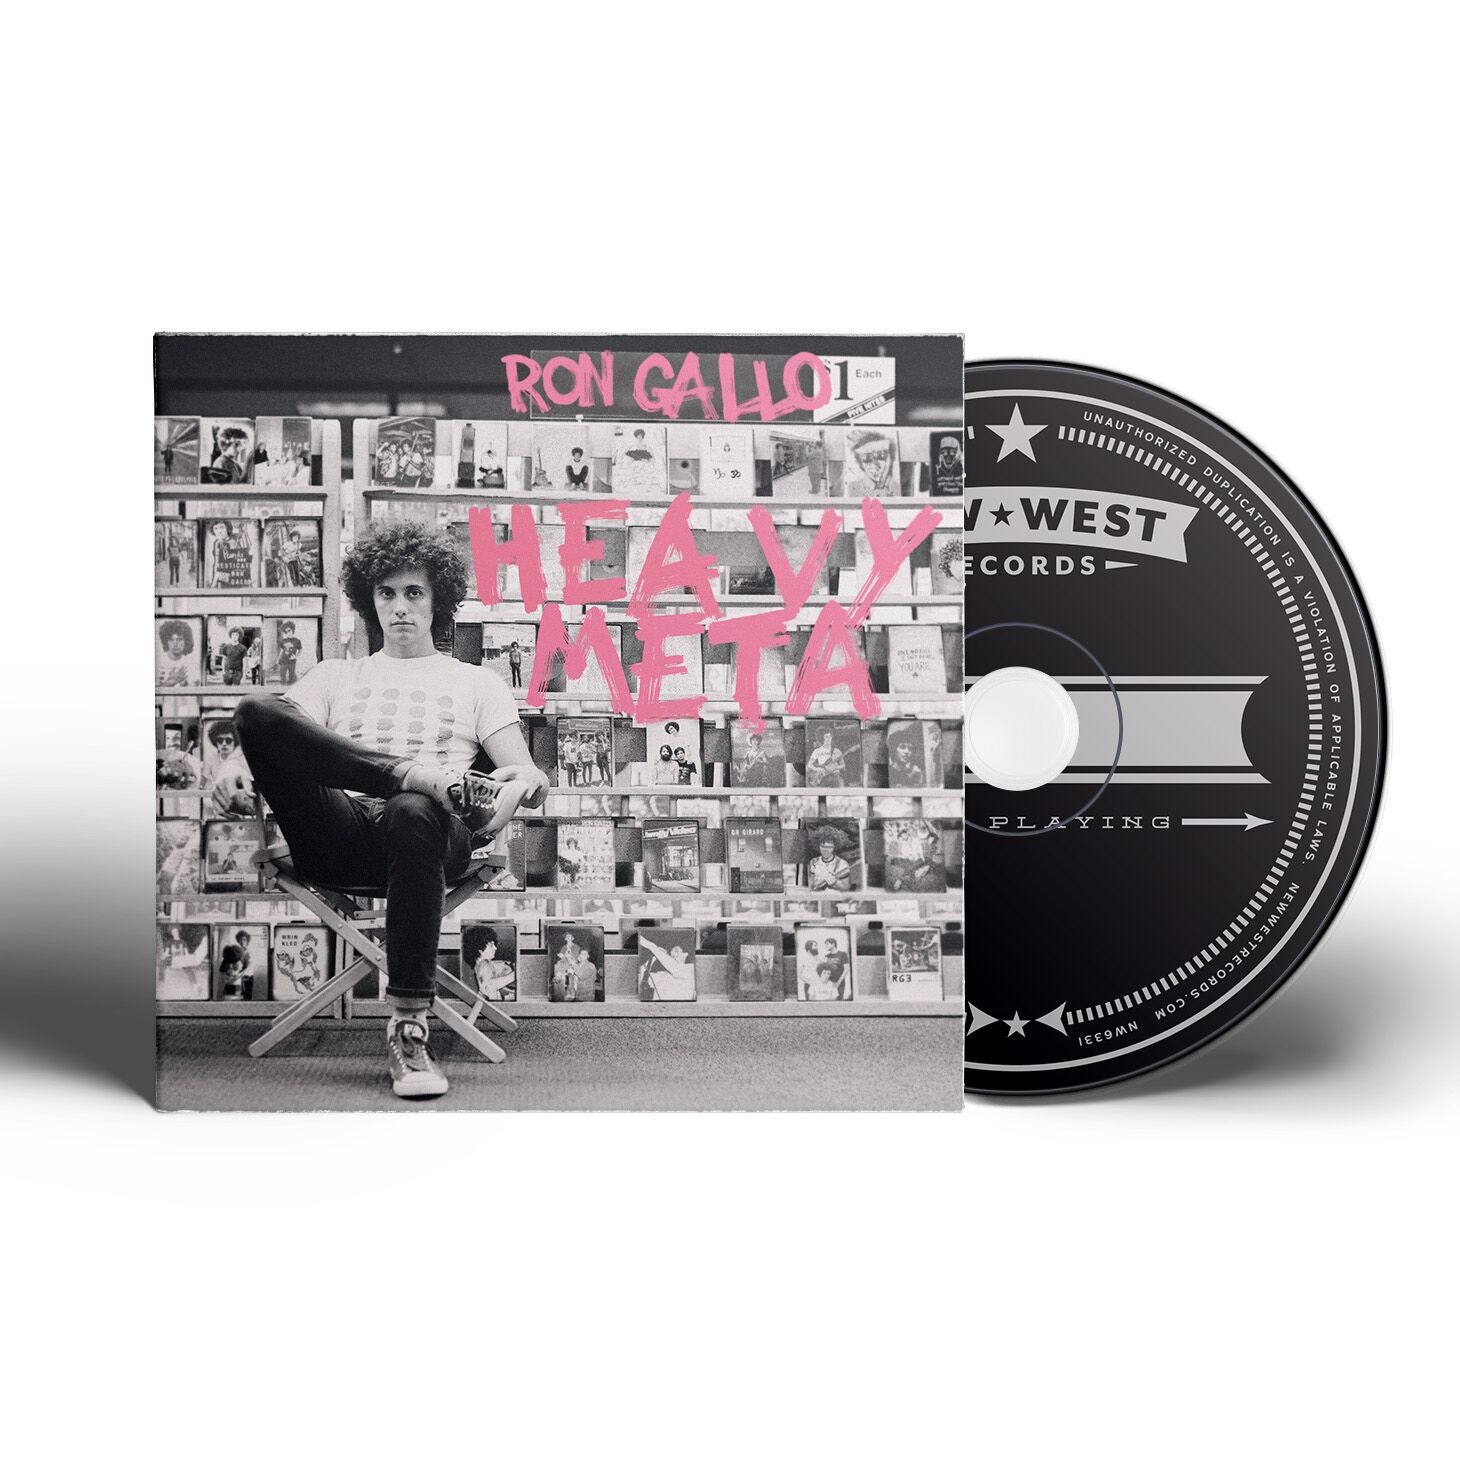 Ron Gallo - HEAVY META [CD]